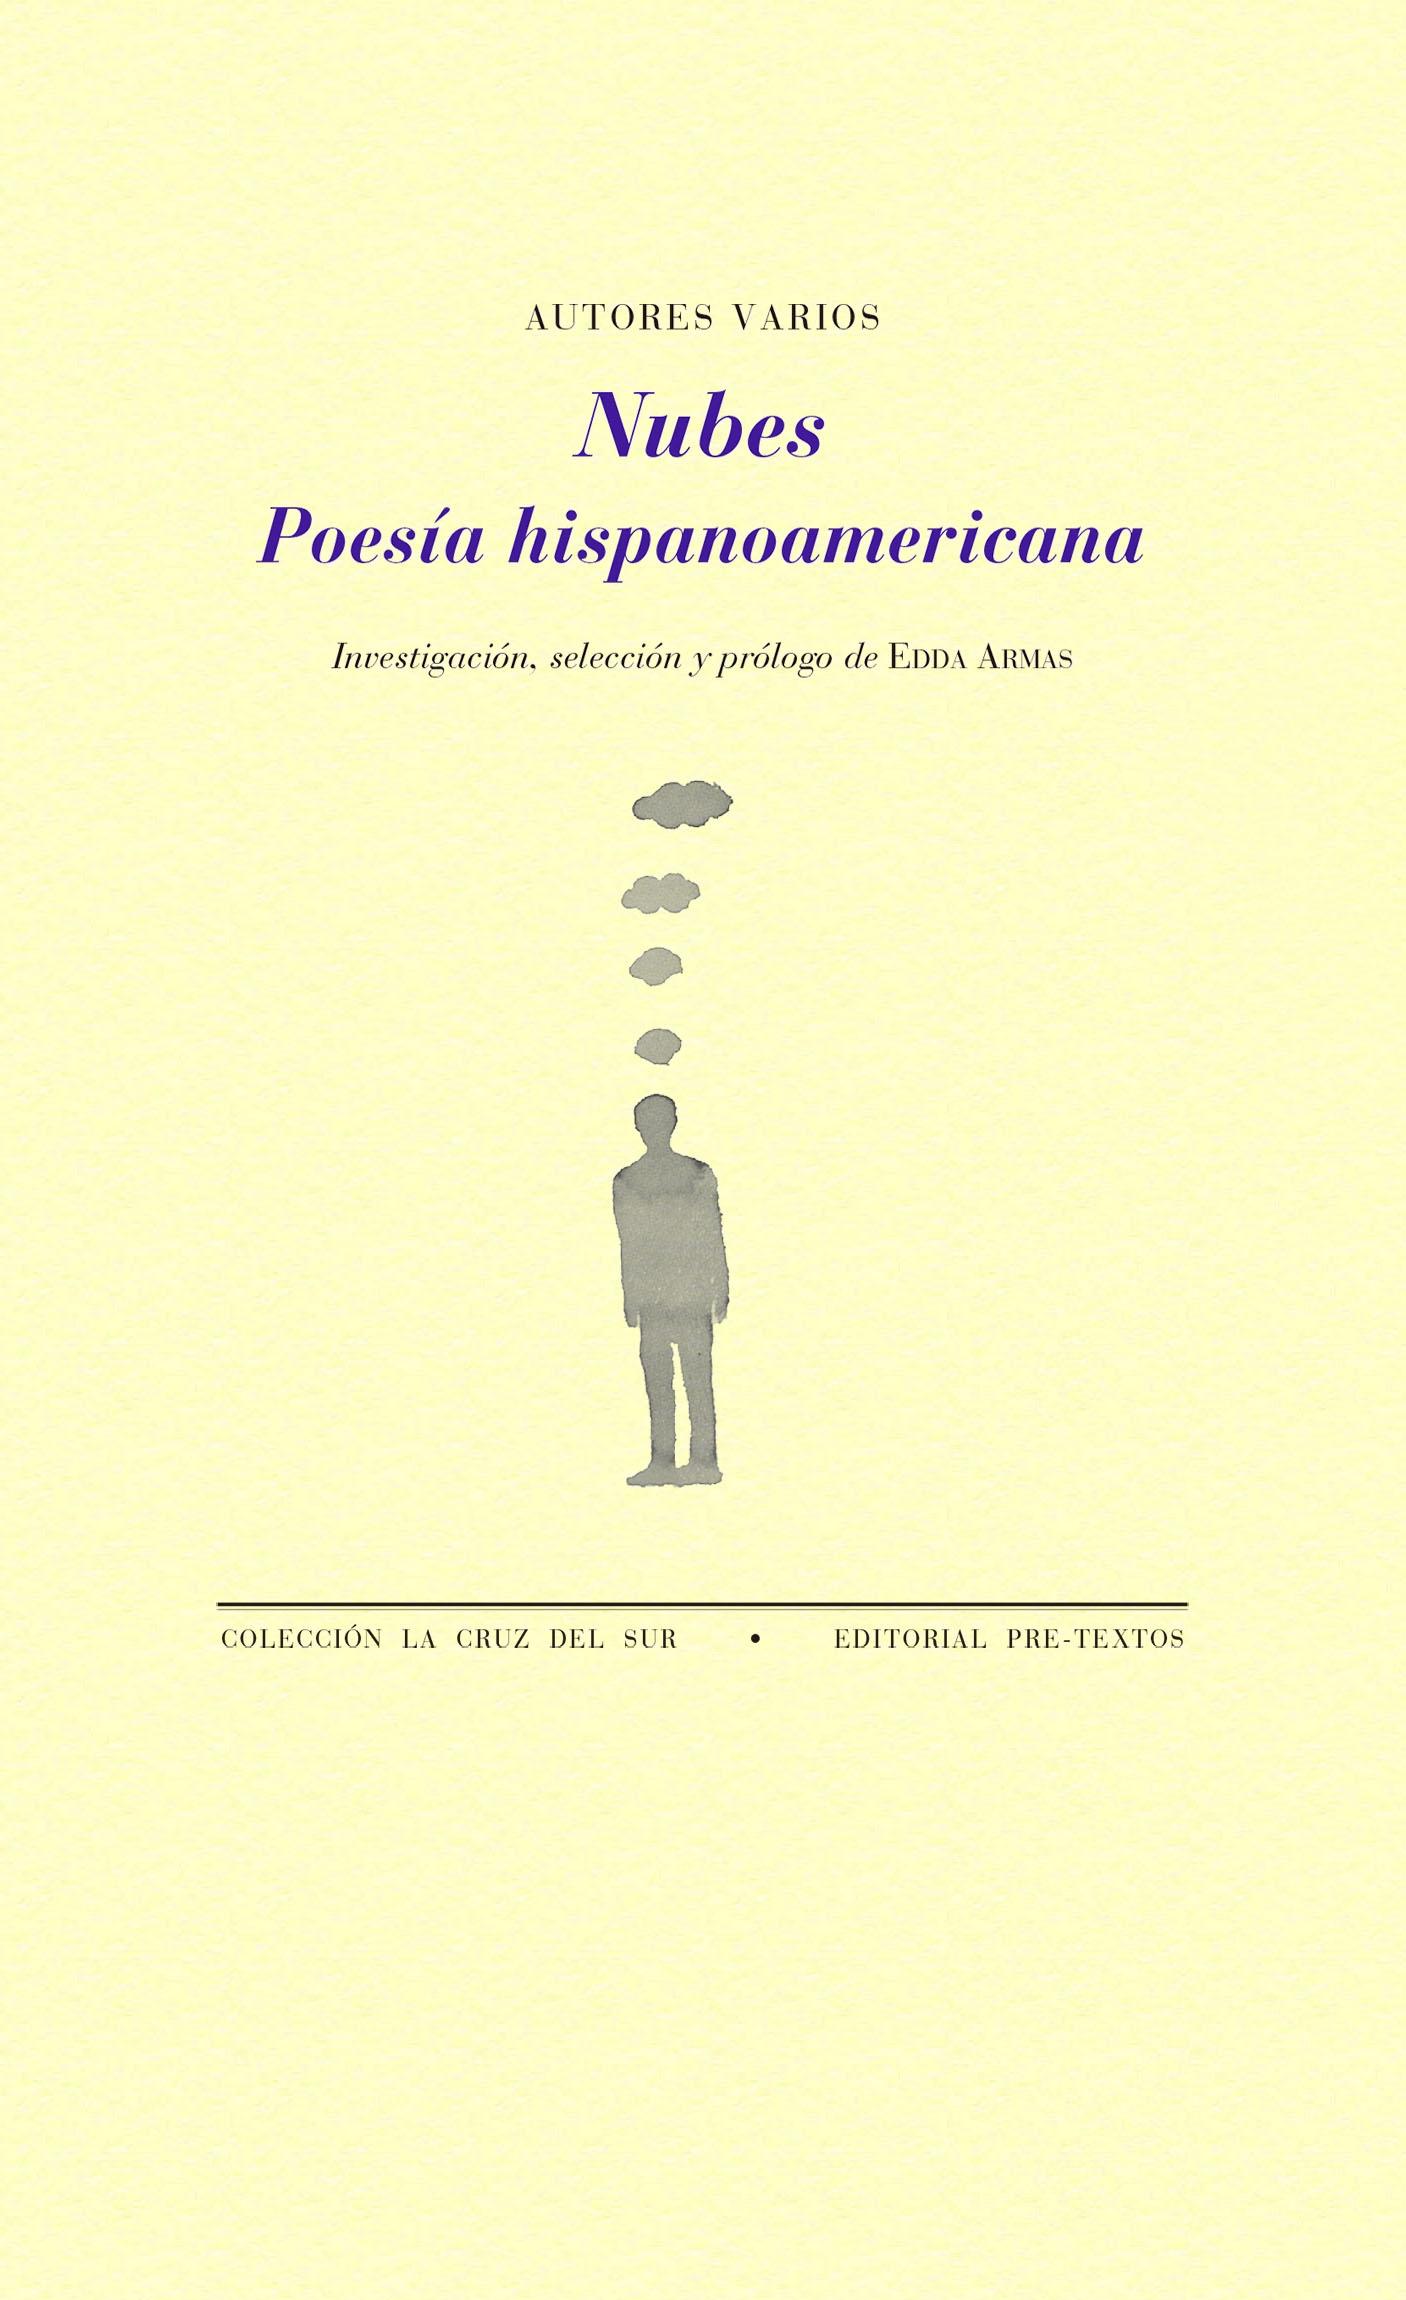 Nubes "Poesía hispanoamericana"